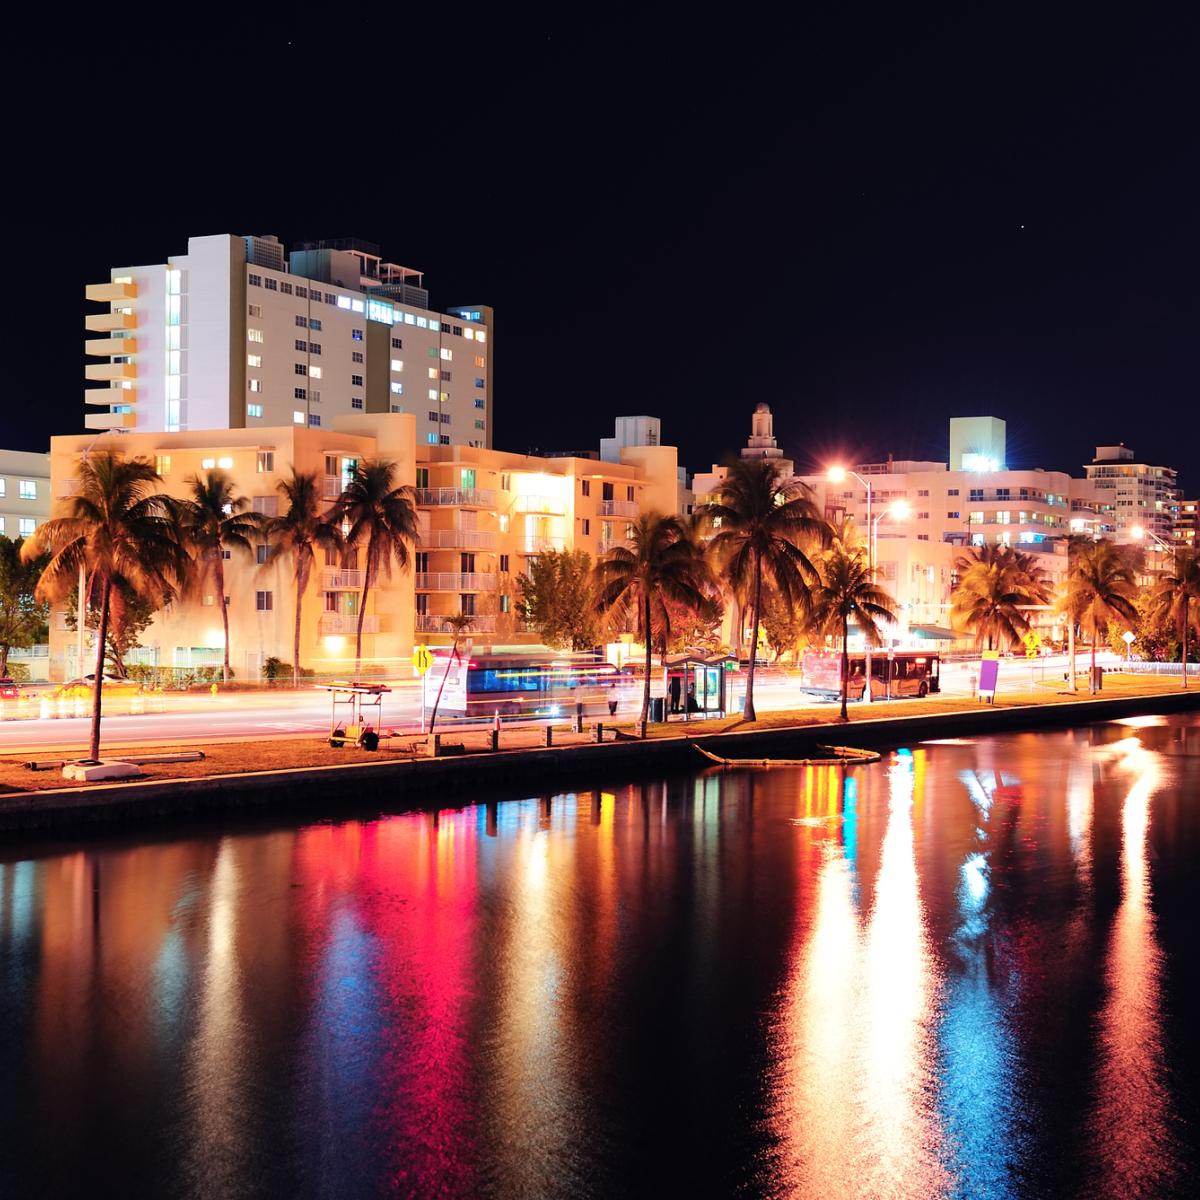 Miami at Night